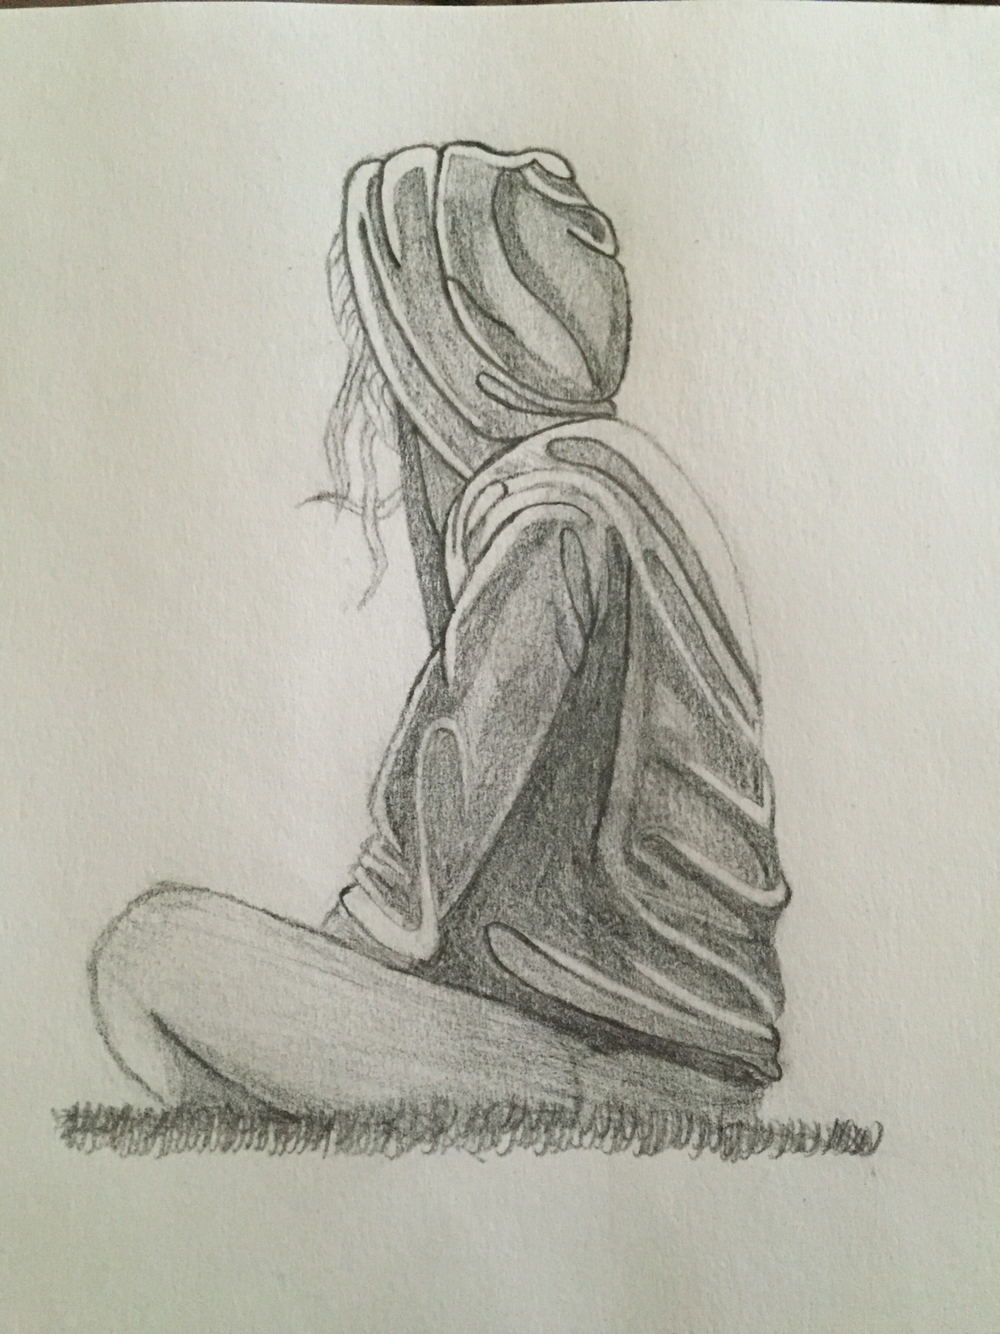 Sad Boy Drawing at GetDrawings | Free download